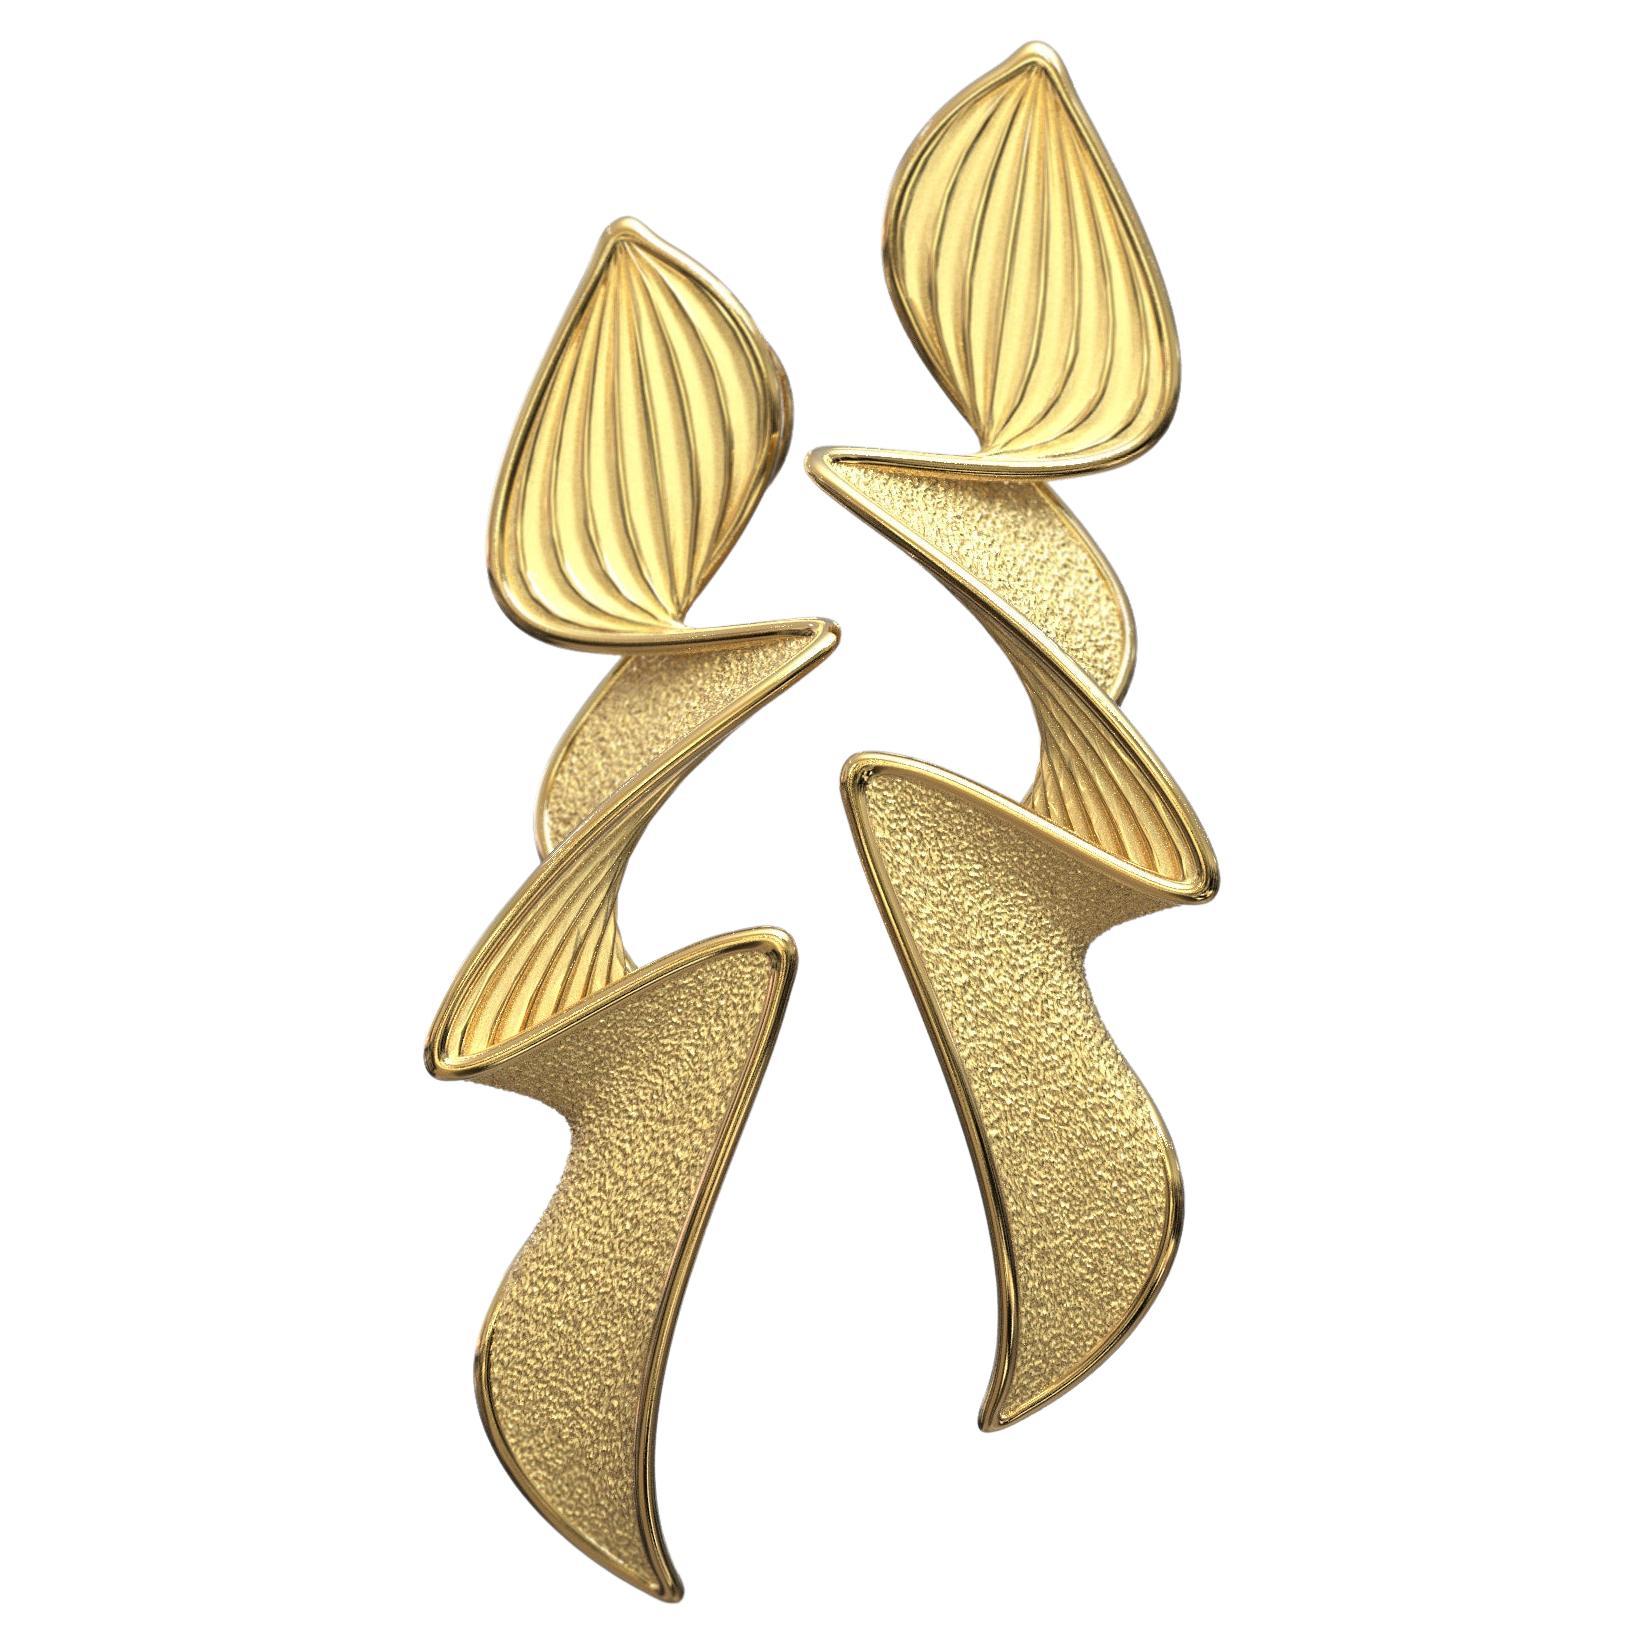 Statement Earrings in 14k by Oltremare Gioielli, Italian Fine Jewelry  For Sale